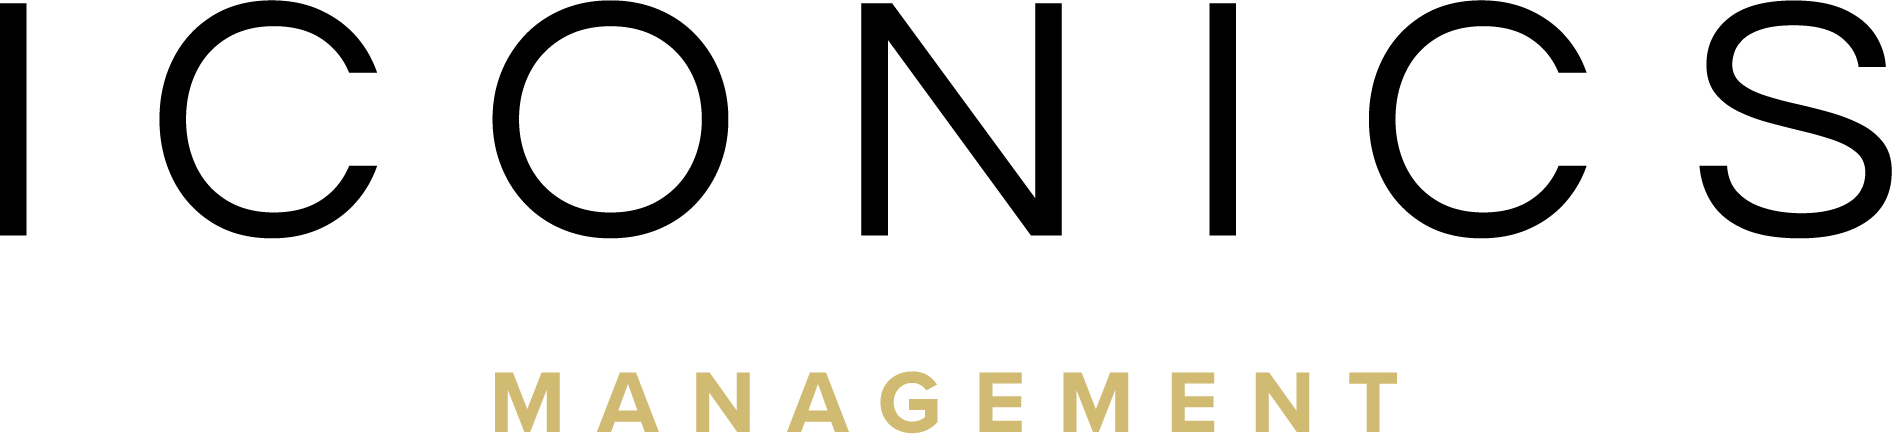 Logo Main business